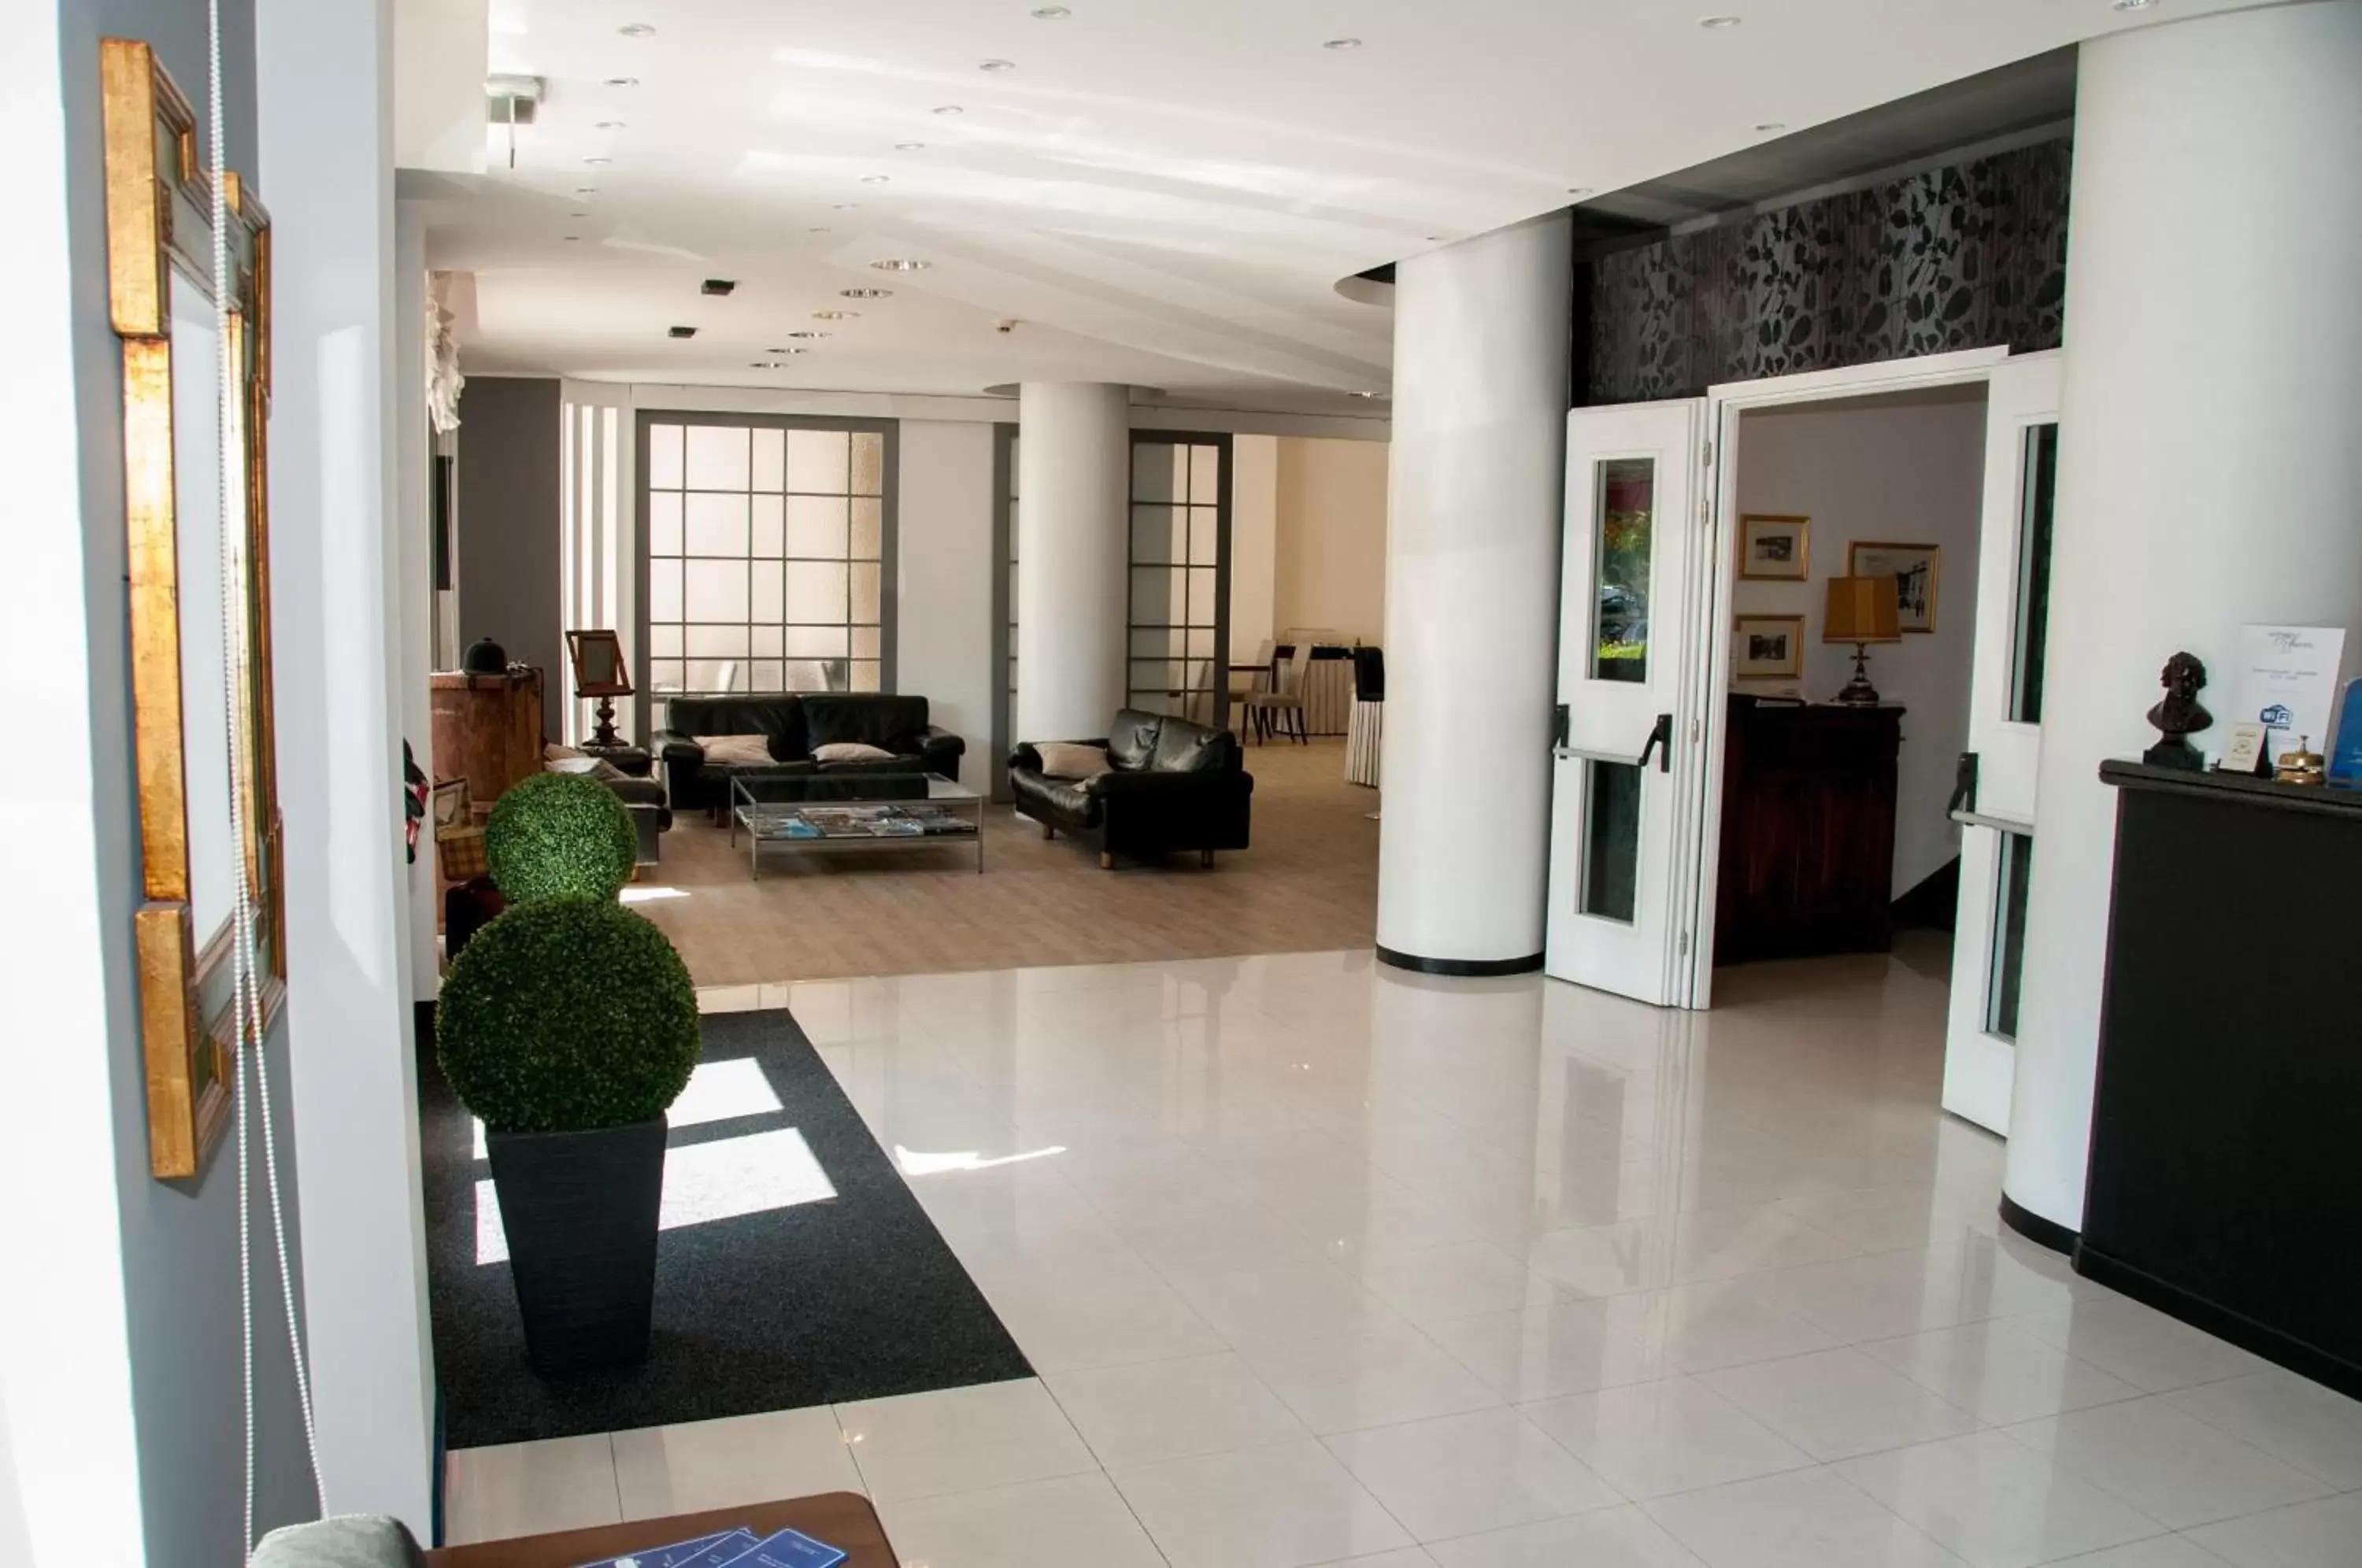 Lobby or reception in Hotel Astoria